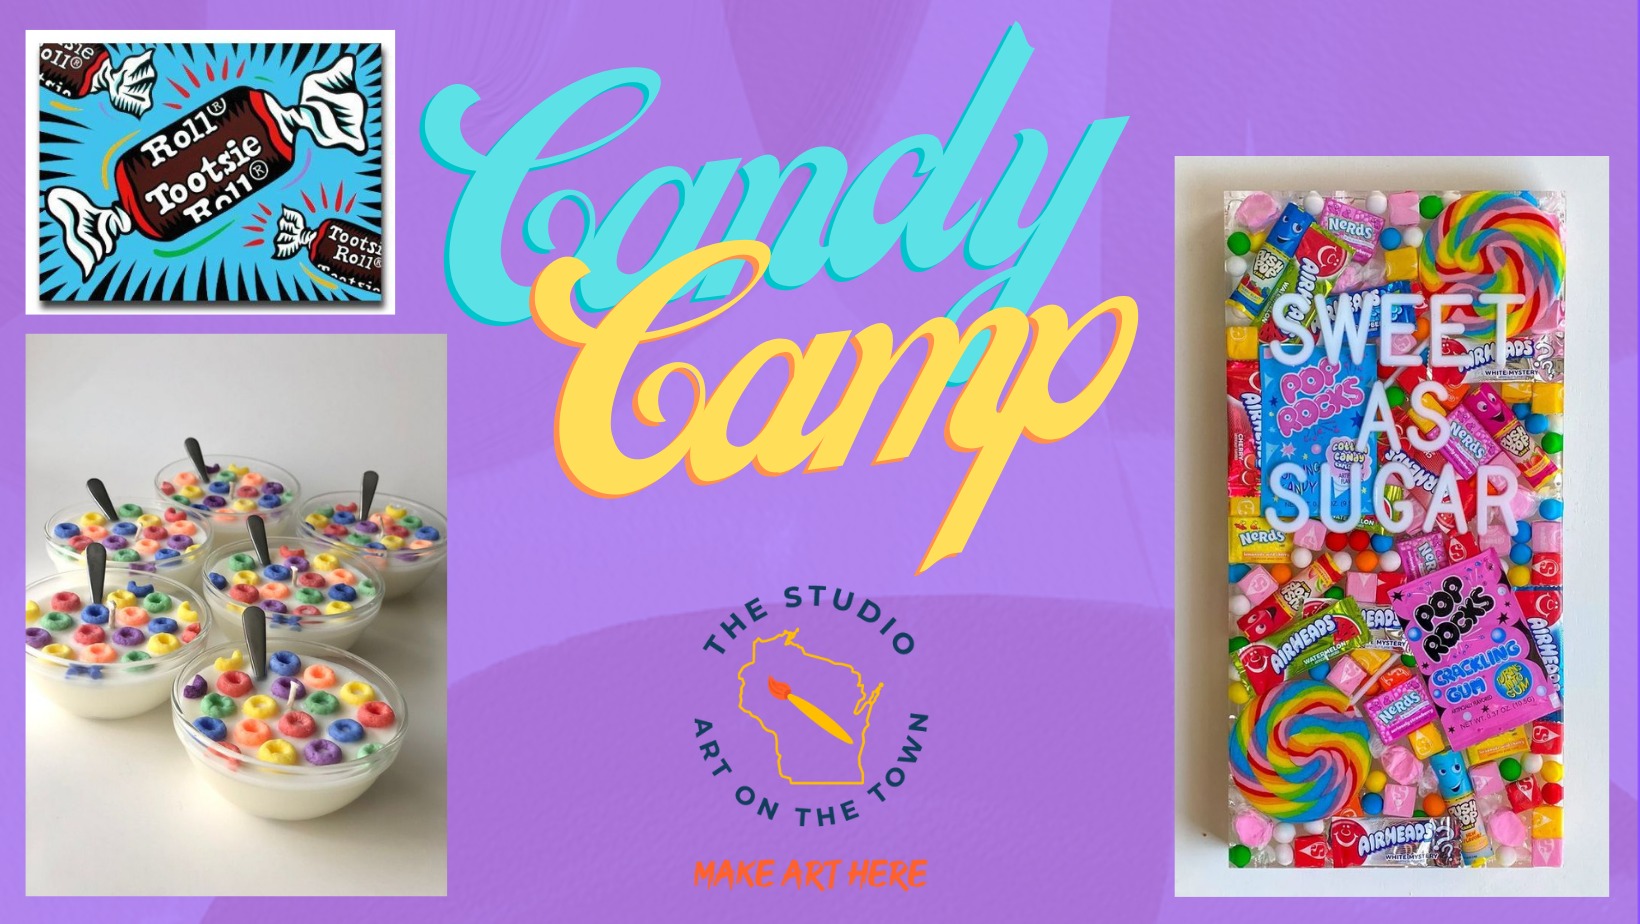 Candy Art Camp